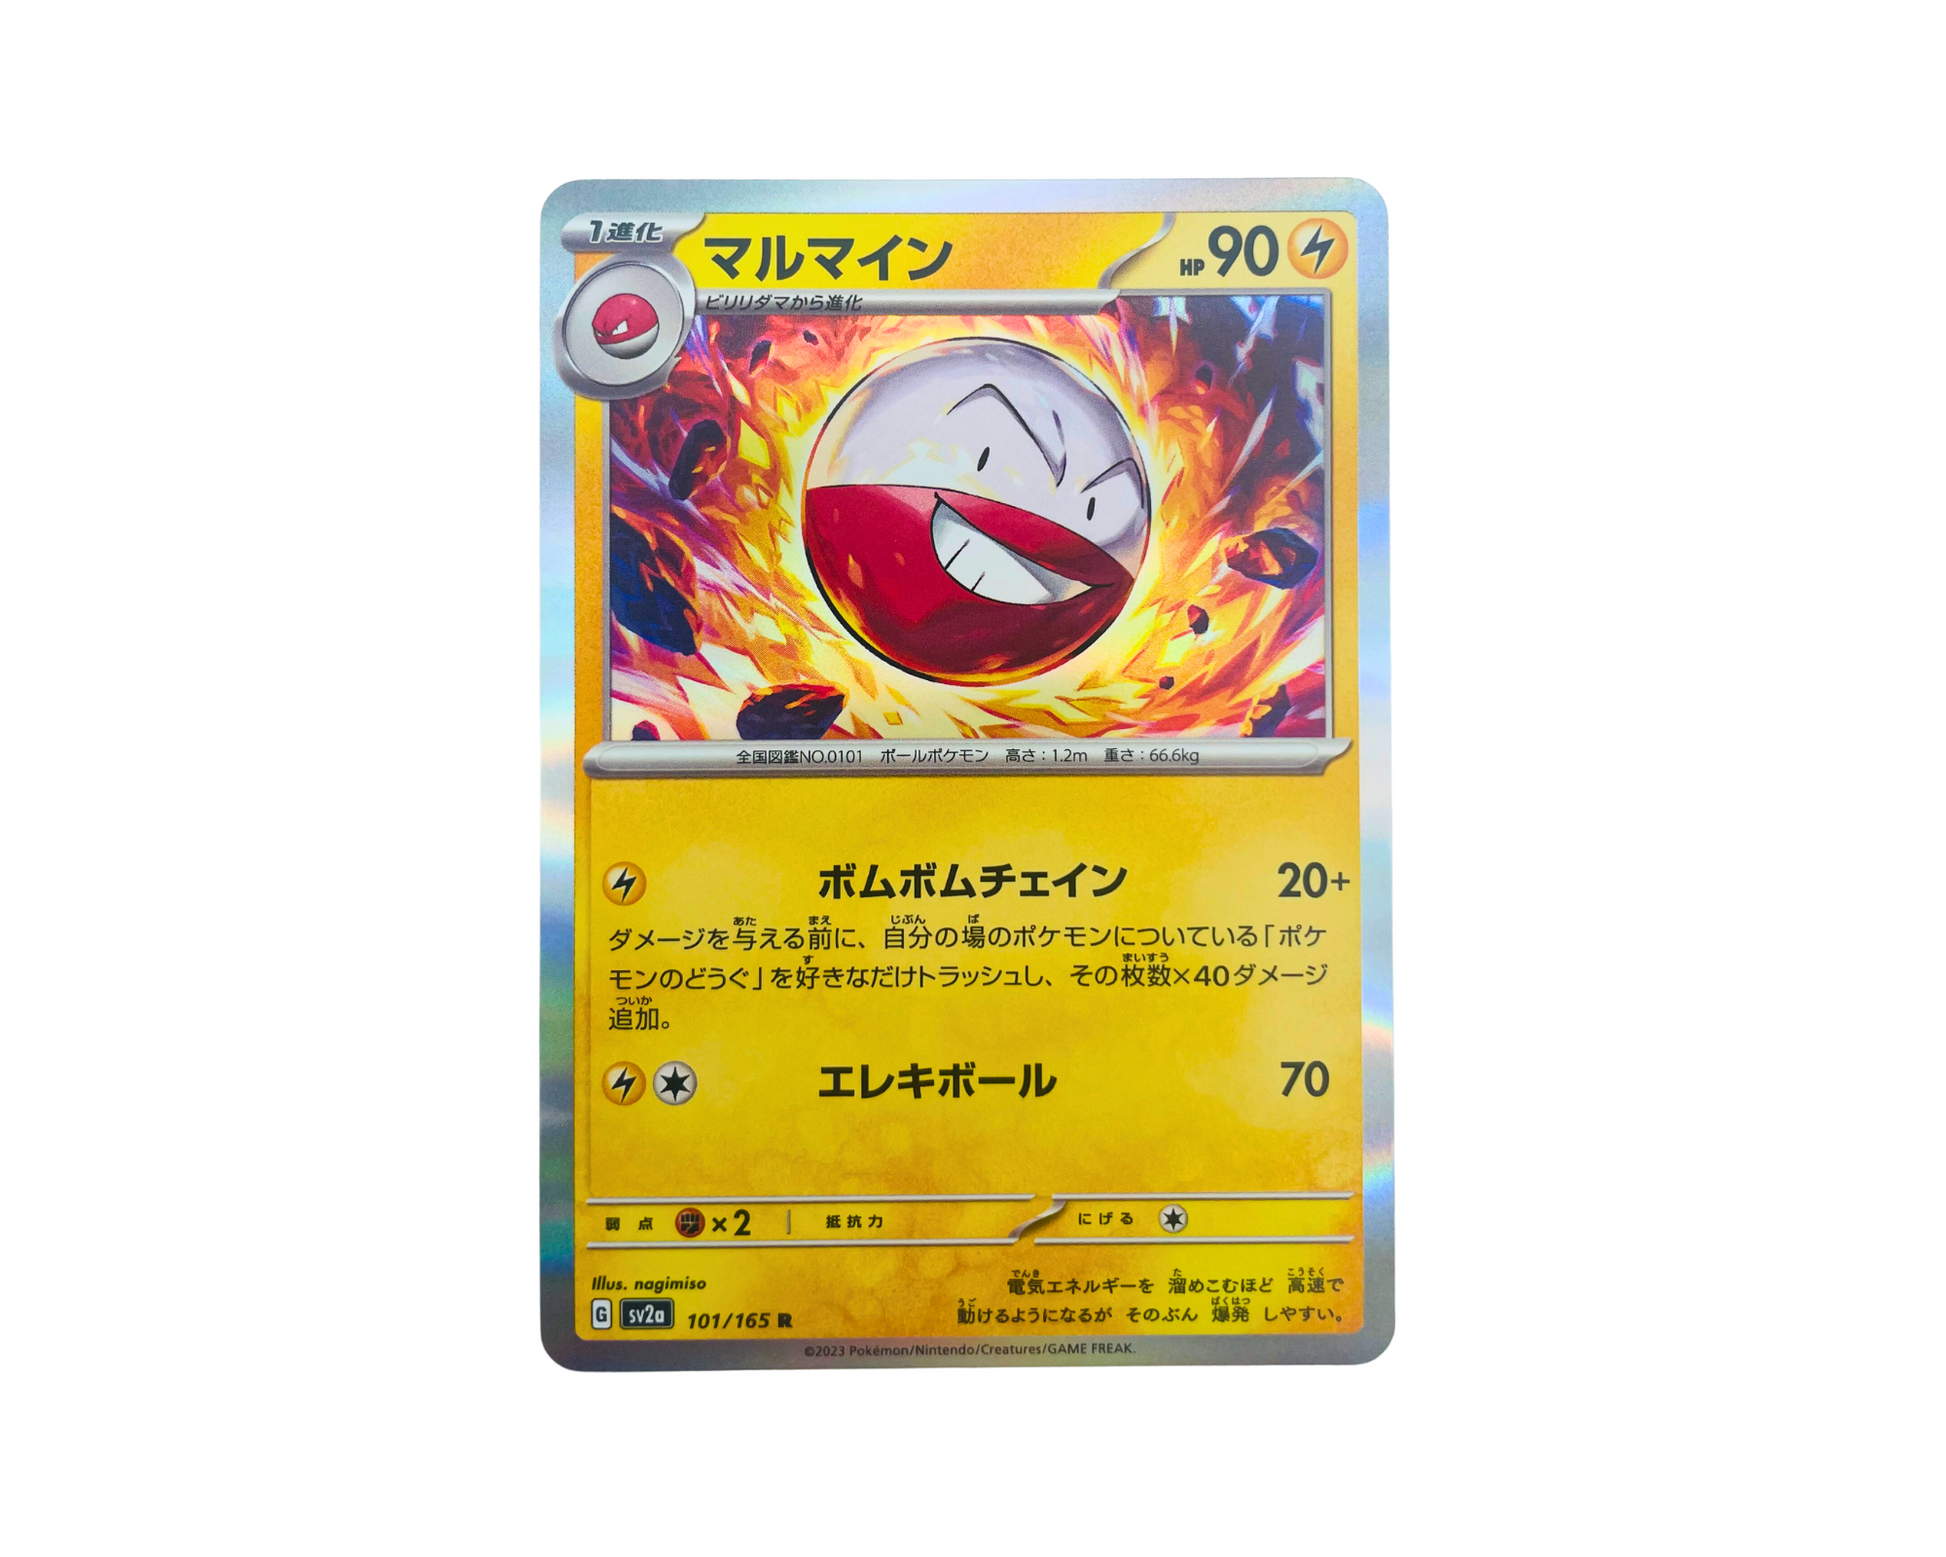 Pokémon - 151 - Voltorb 100/165 - Reverse Holo - ENGLISH - NM/M